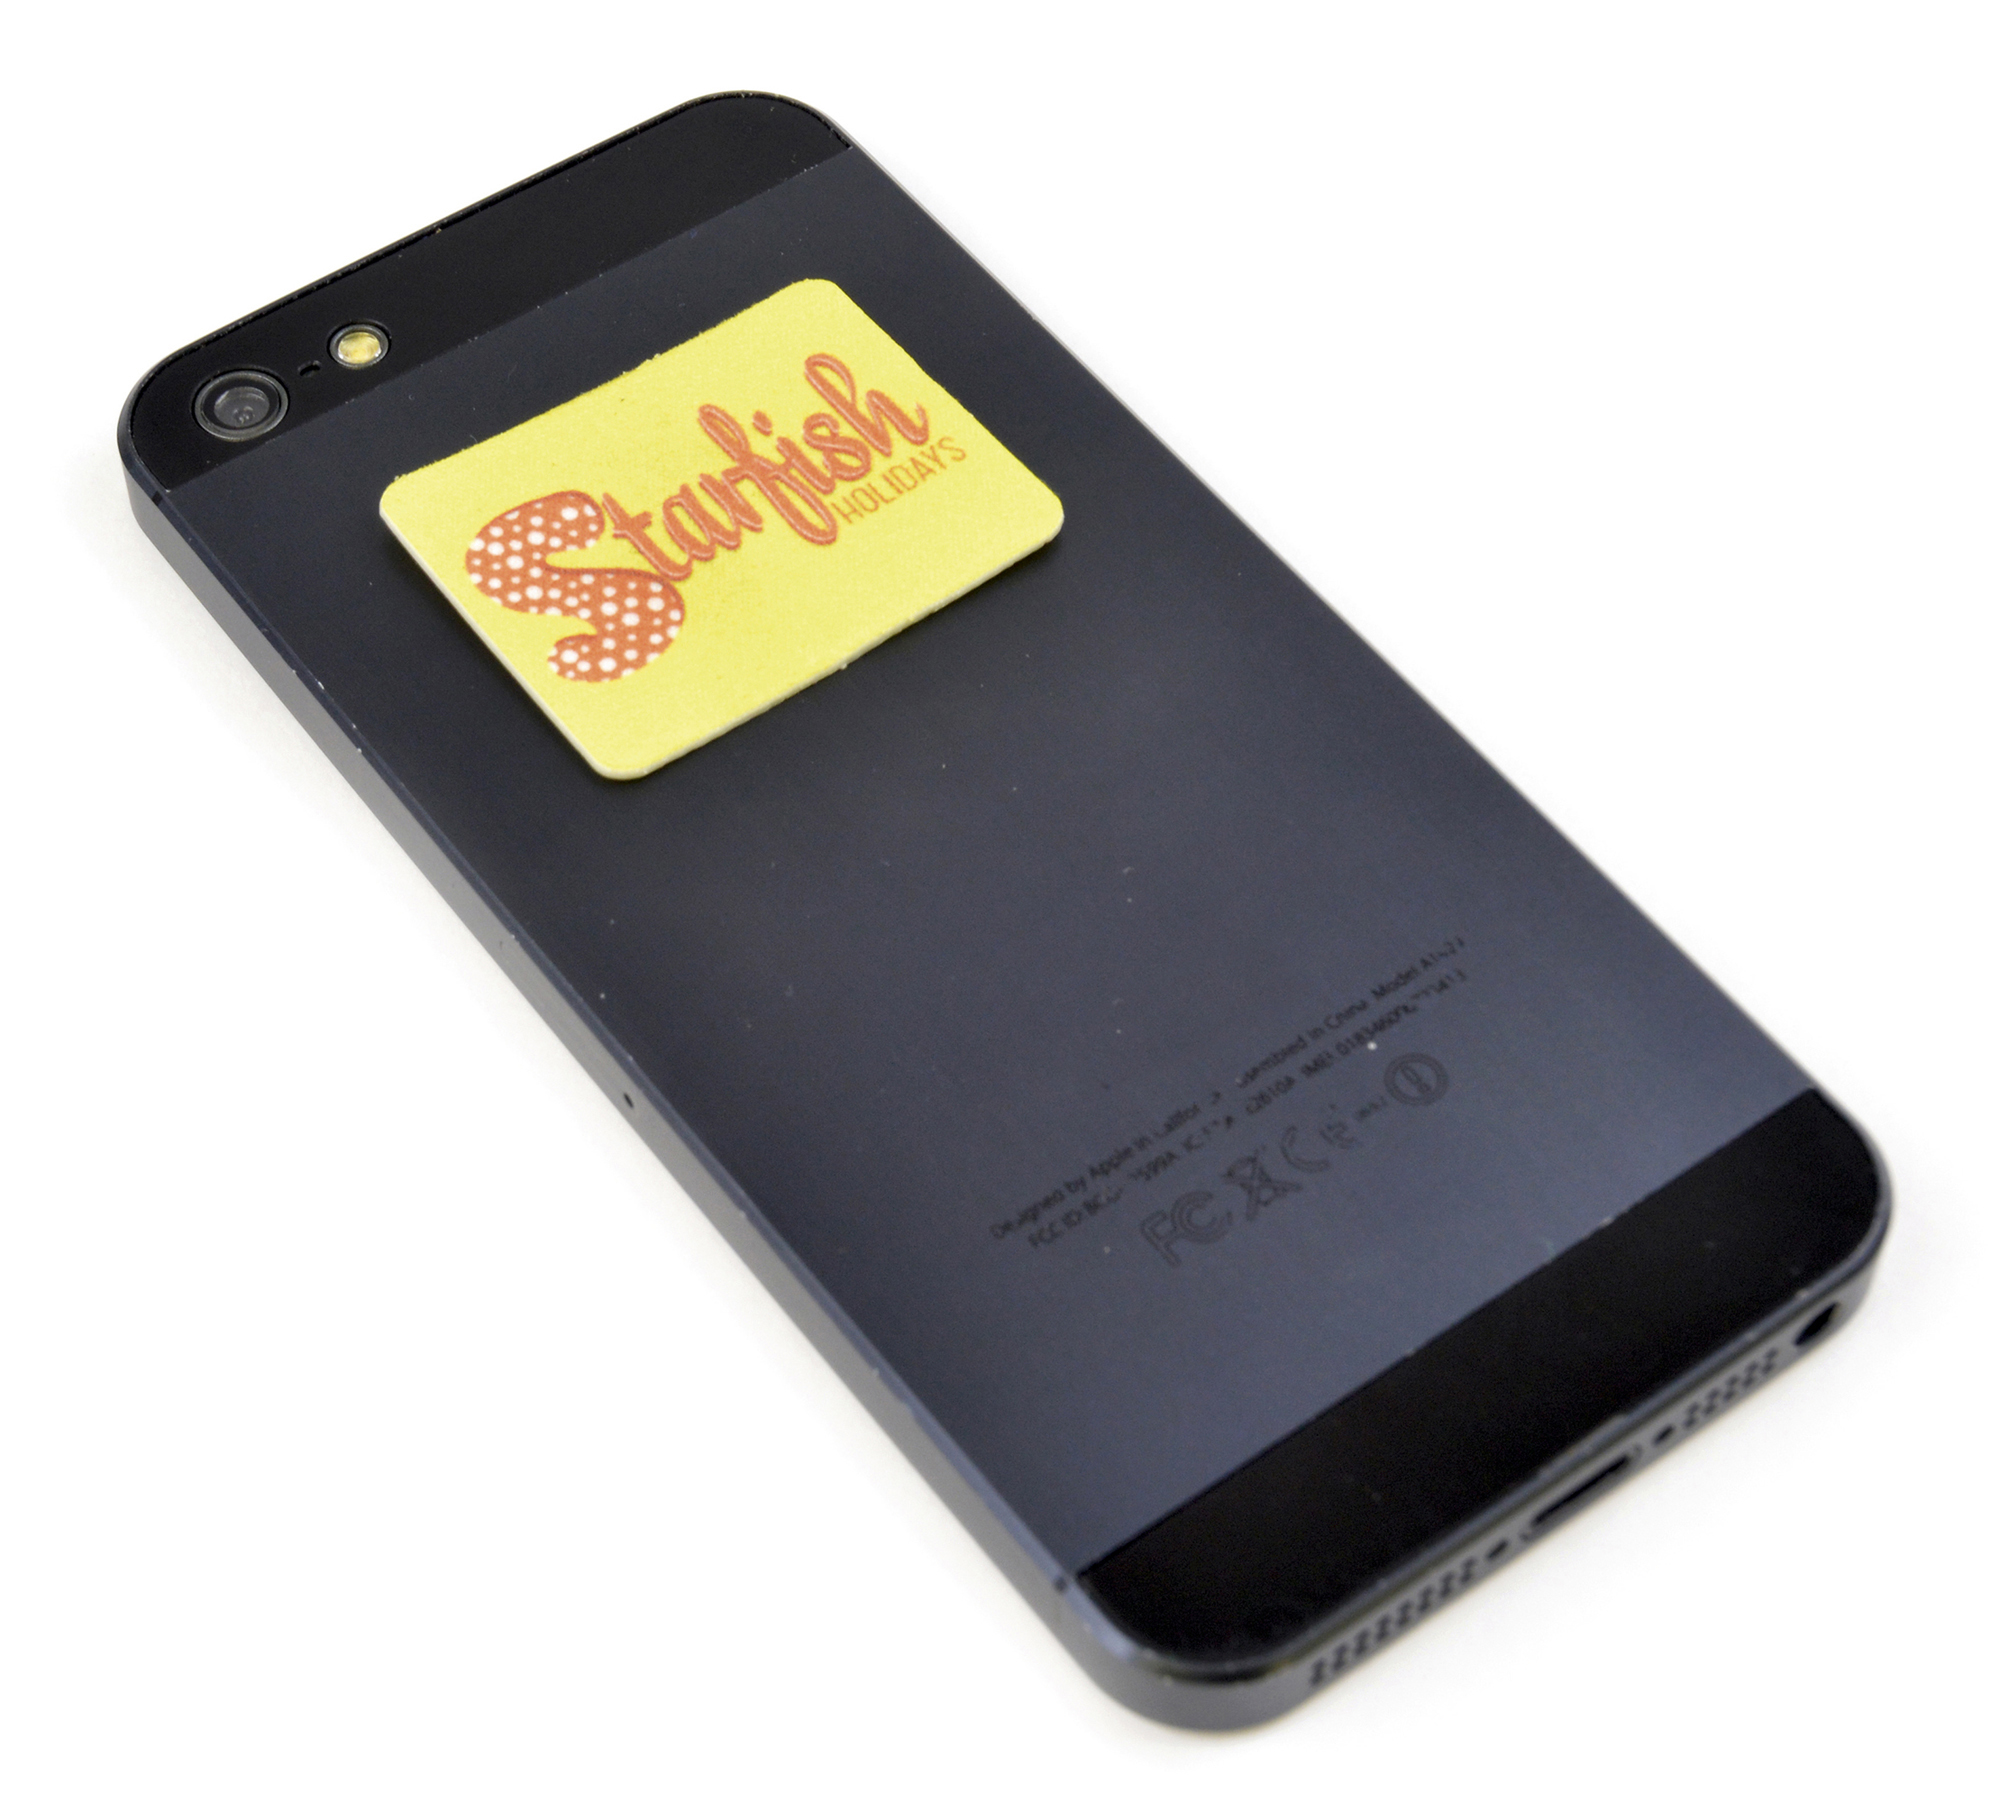  Mobile  Phone Cleaner Mannik Merchandise LTD